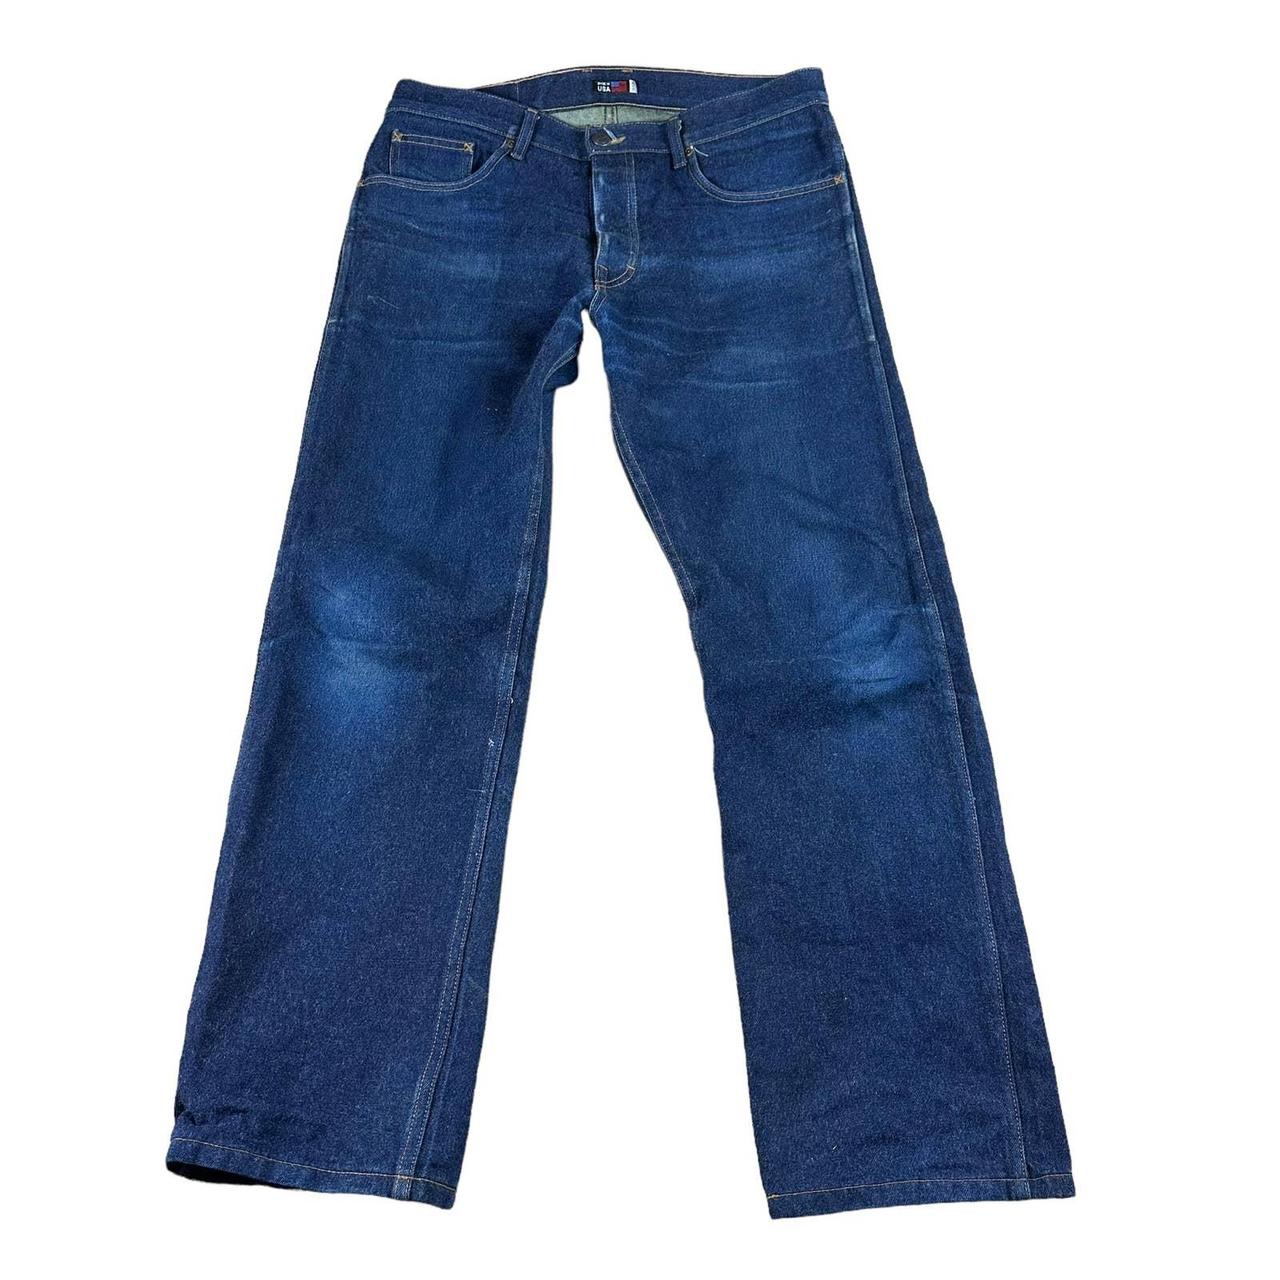 Mr. Denim in Akola City,Akola - Best Just Cavalli-Denim Jeans Retailers in  Akola - Justdial